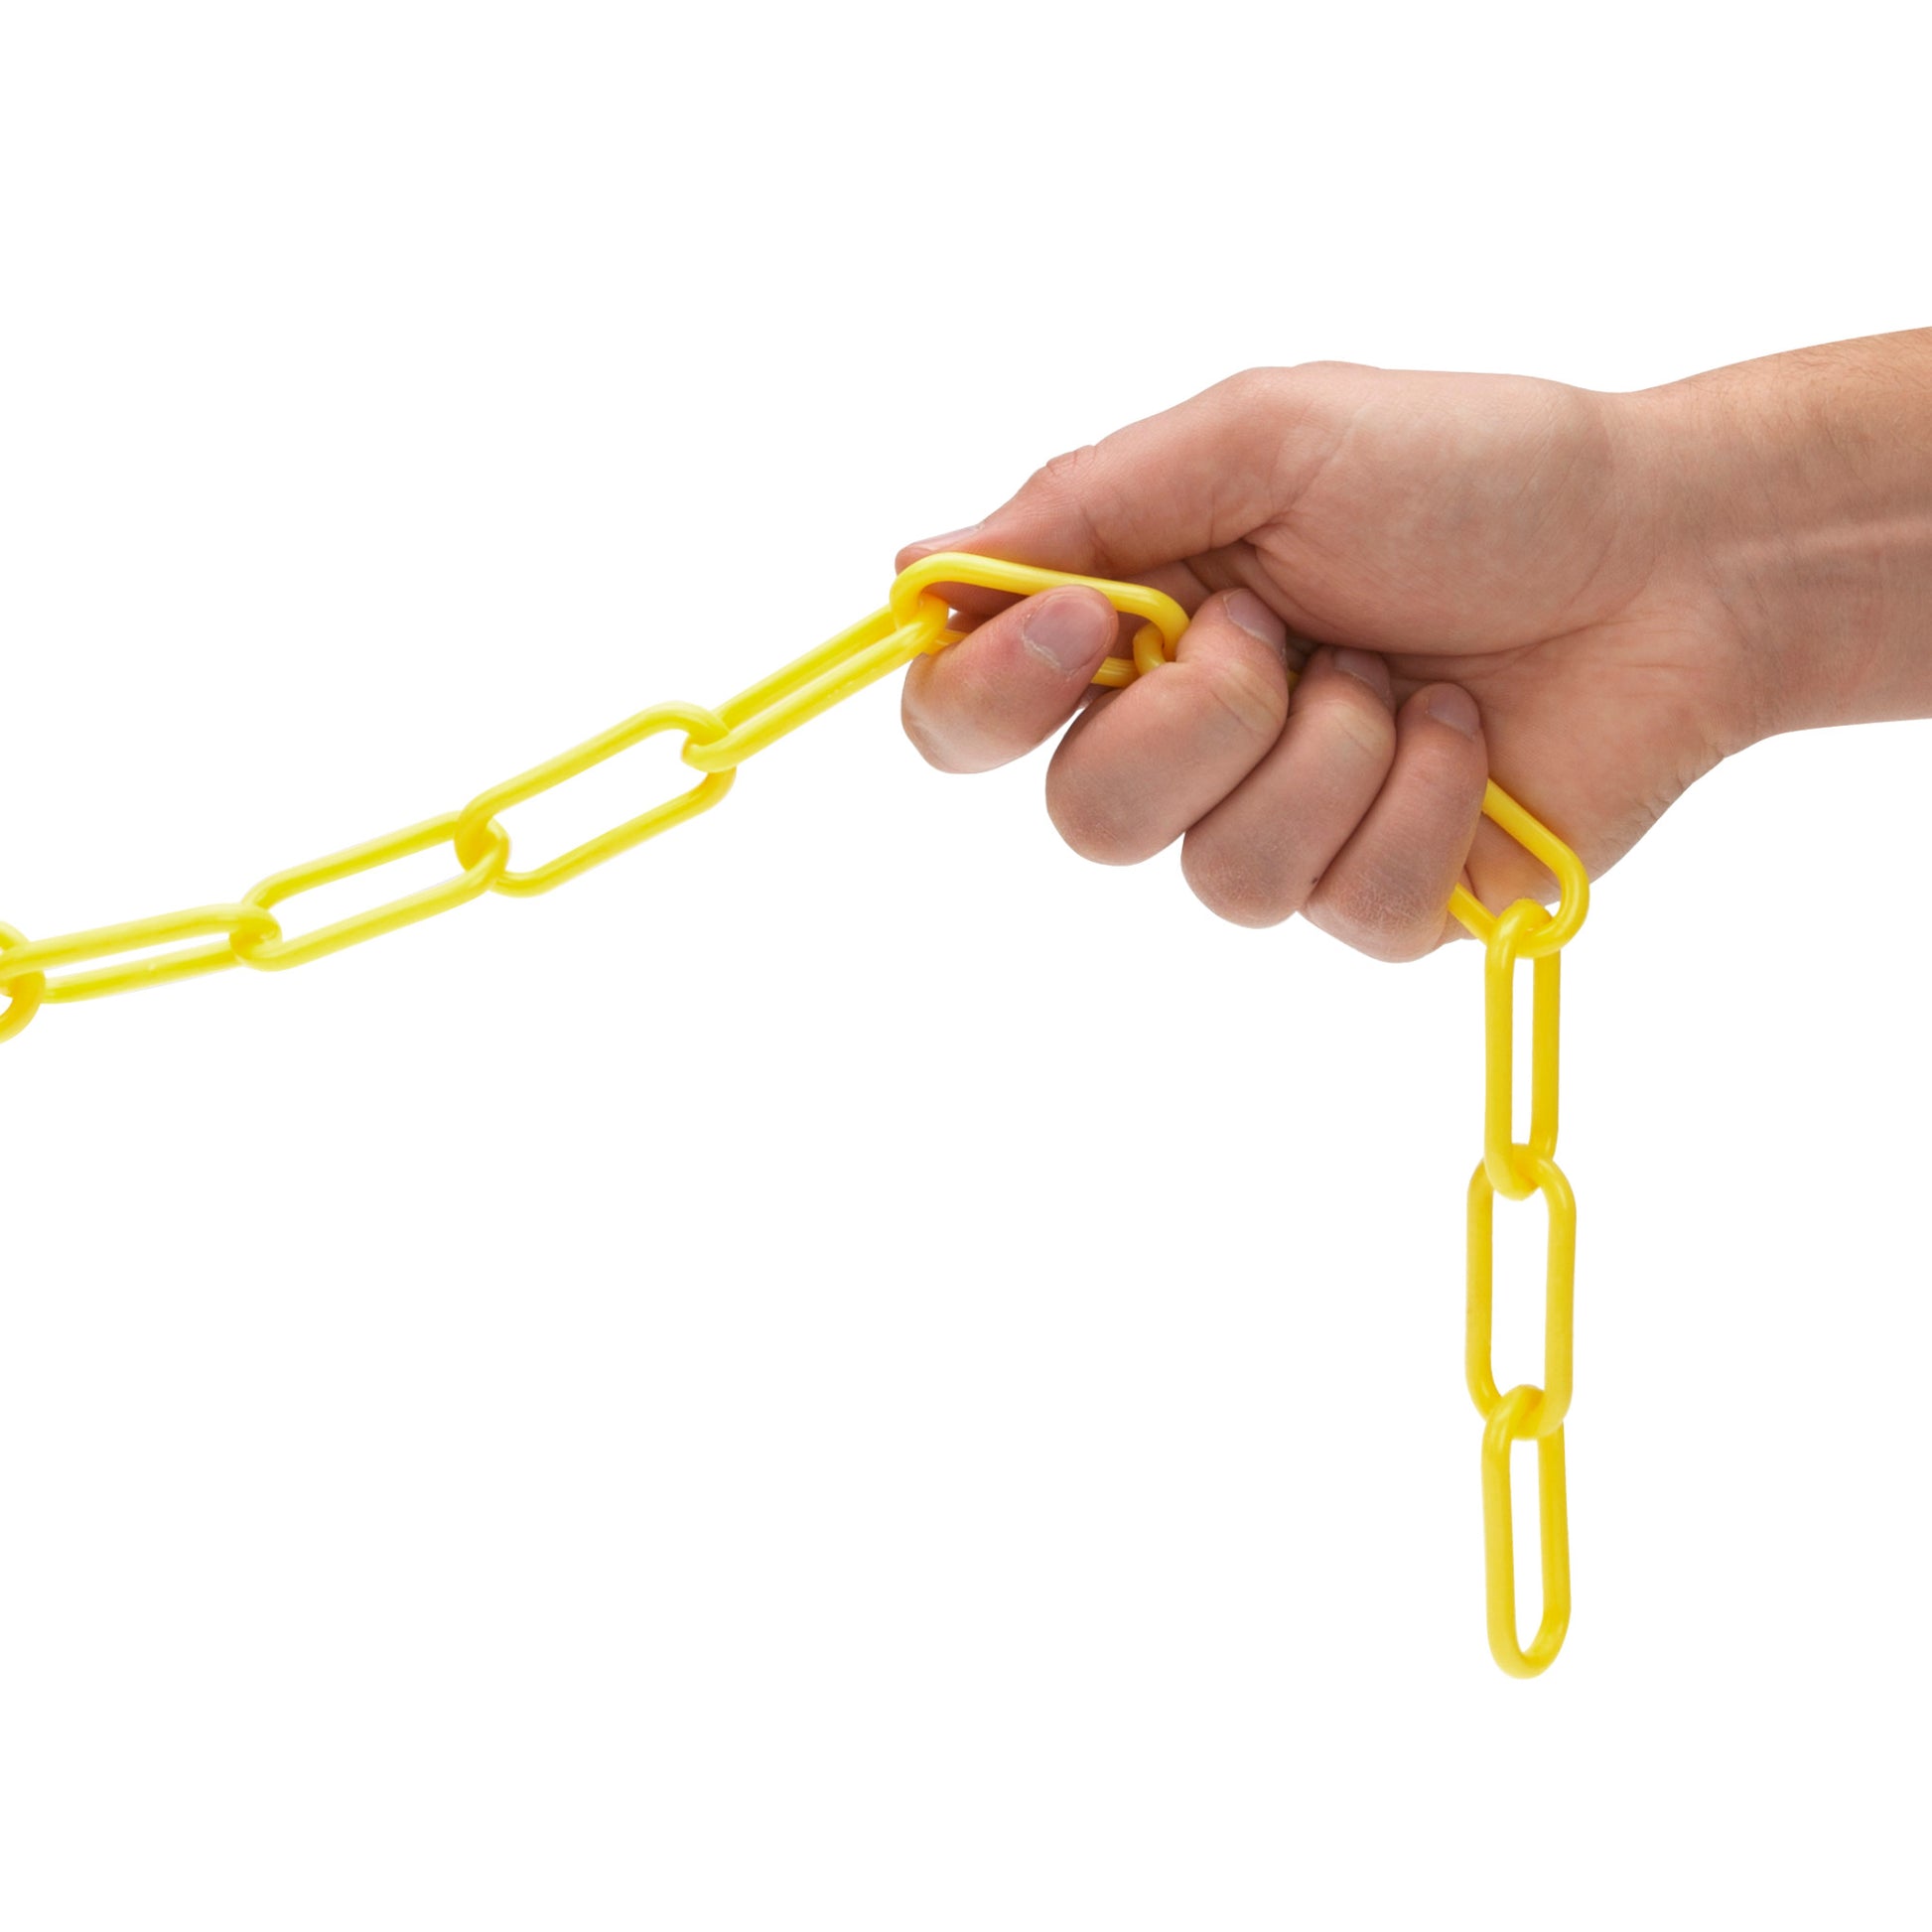 PLASTIC CHAIN, Yellow, Chain Size: 2, Trade Size: #8, Chain Length: 100'  Box